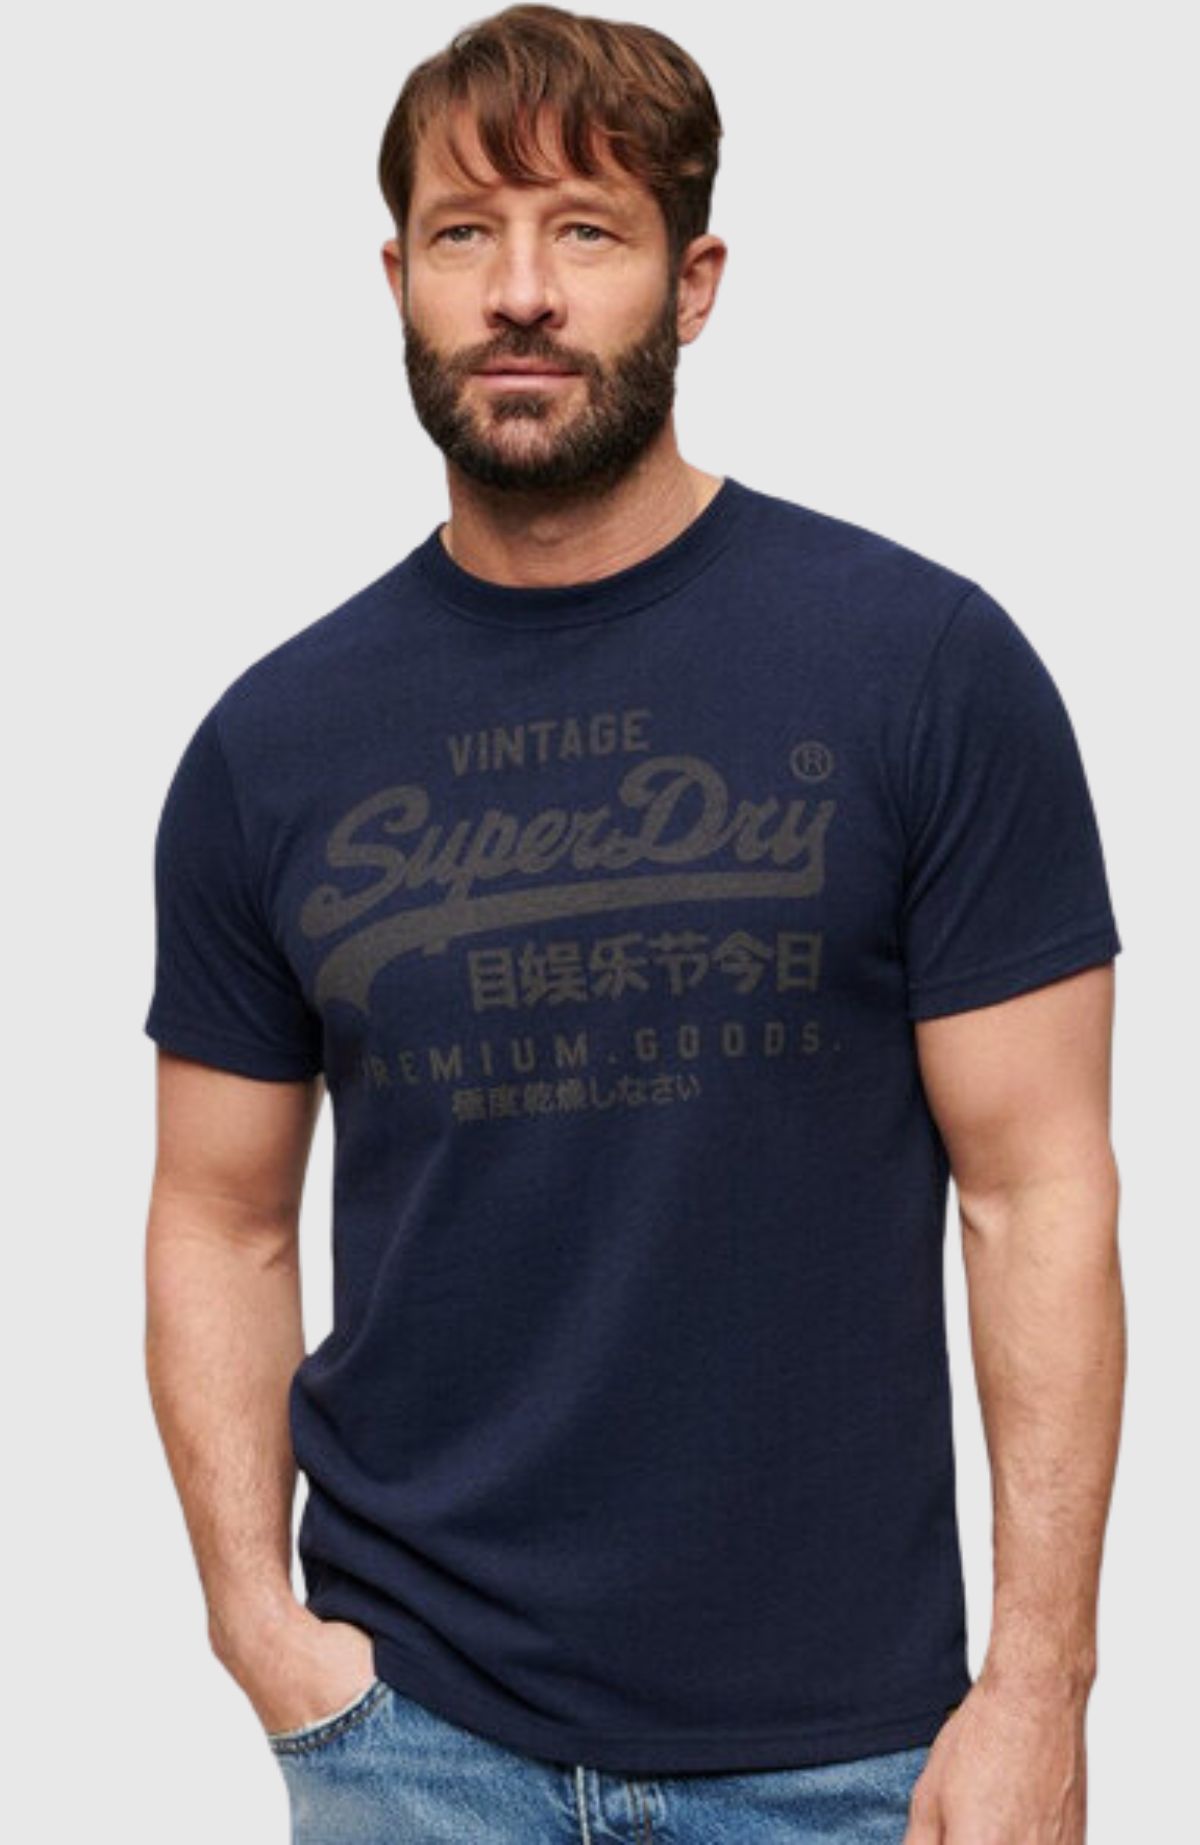 Classic Vl Heritage T Shirt